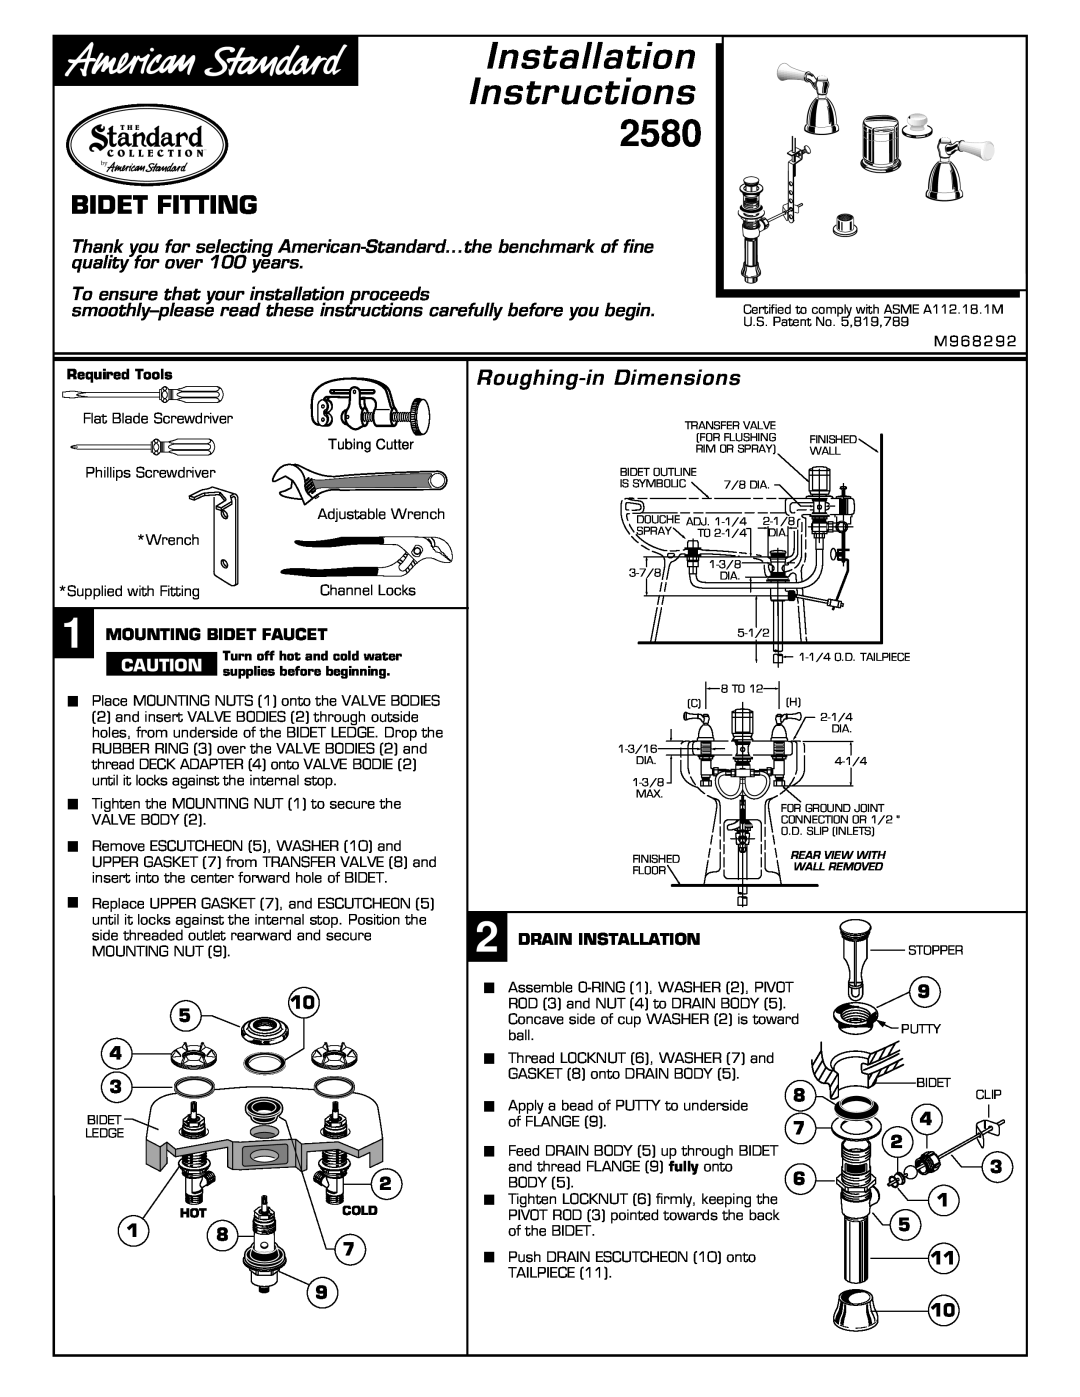 American Standard 2580 installation instructions Installation Instructions, Bidet Fitting, Roughing-inDimensions 